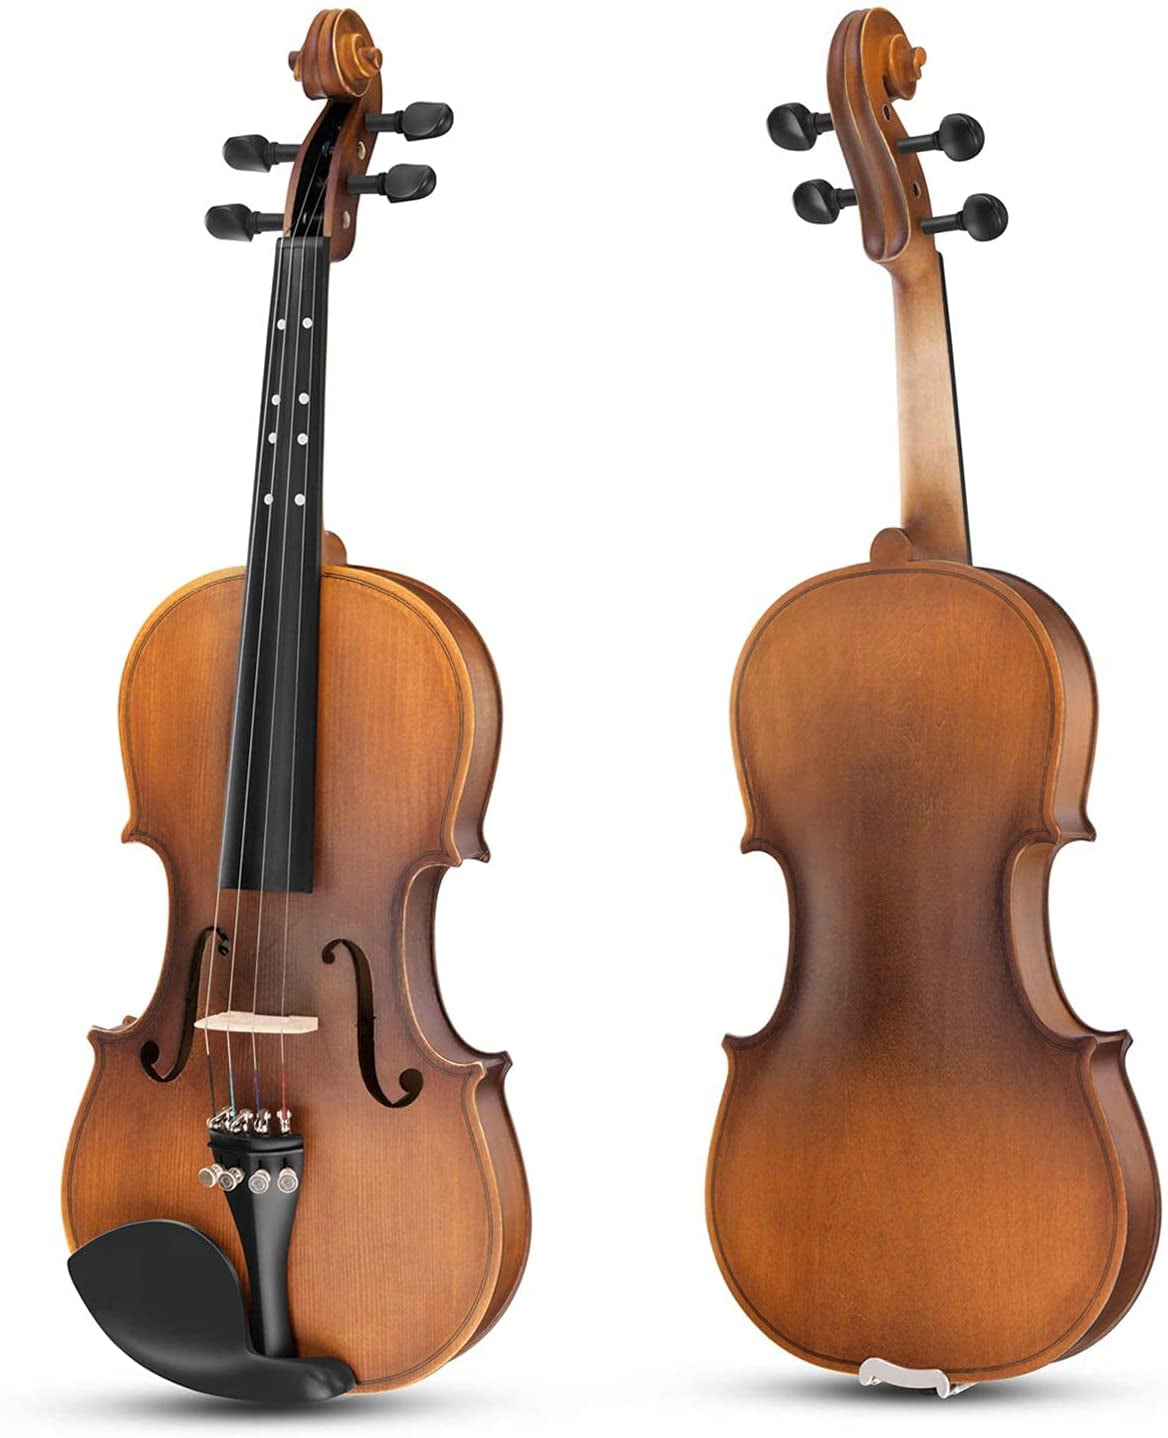 Eastar 1/4 Violin EVA-1 Acoustic Student Violin Set For Beginner with Hard Case Rosin Shoulder Rest Clip-on Tuner and Extra Strings Bow